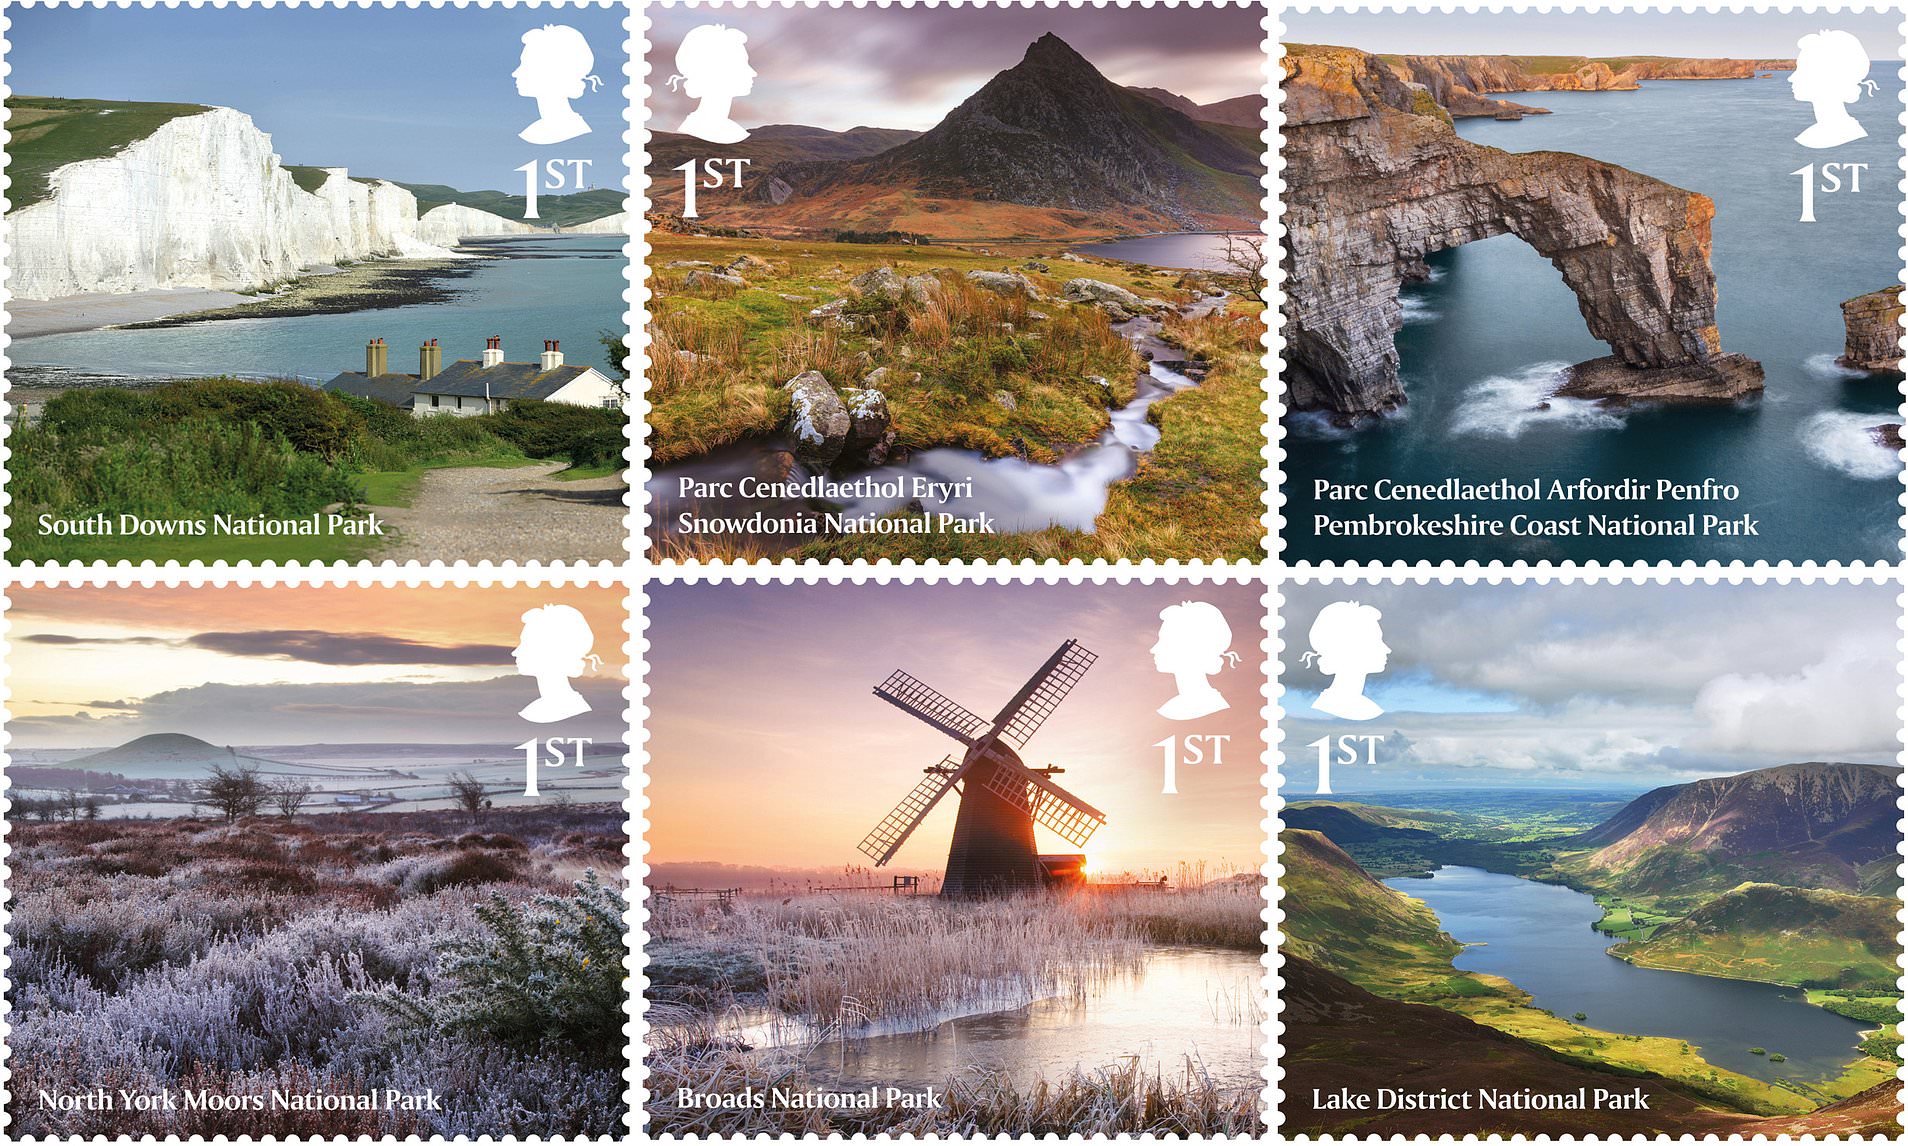 National Park stamps